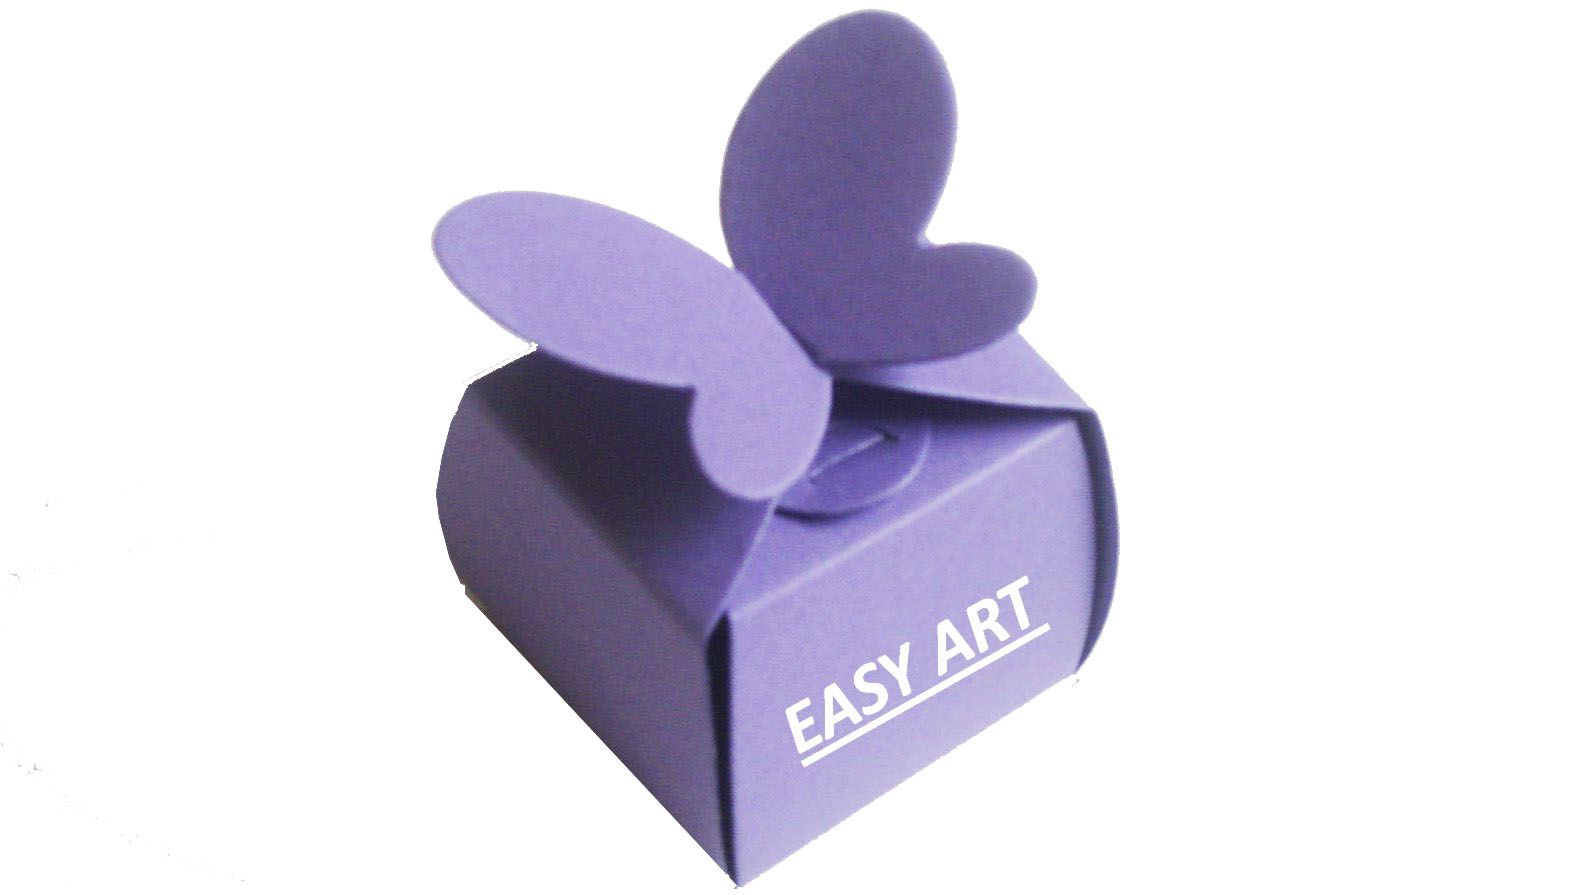 Caixinha para Bombons - 4,5x4,5x4,5 - Easy Art Embalagens Artesanais